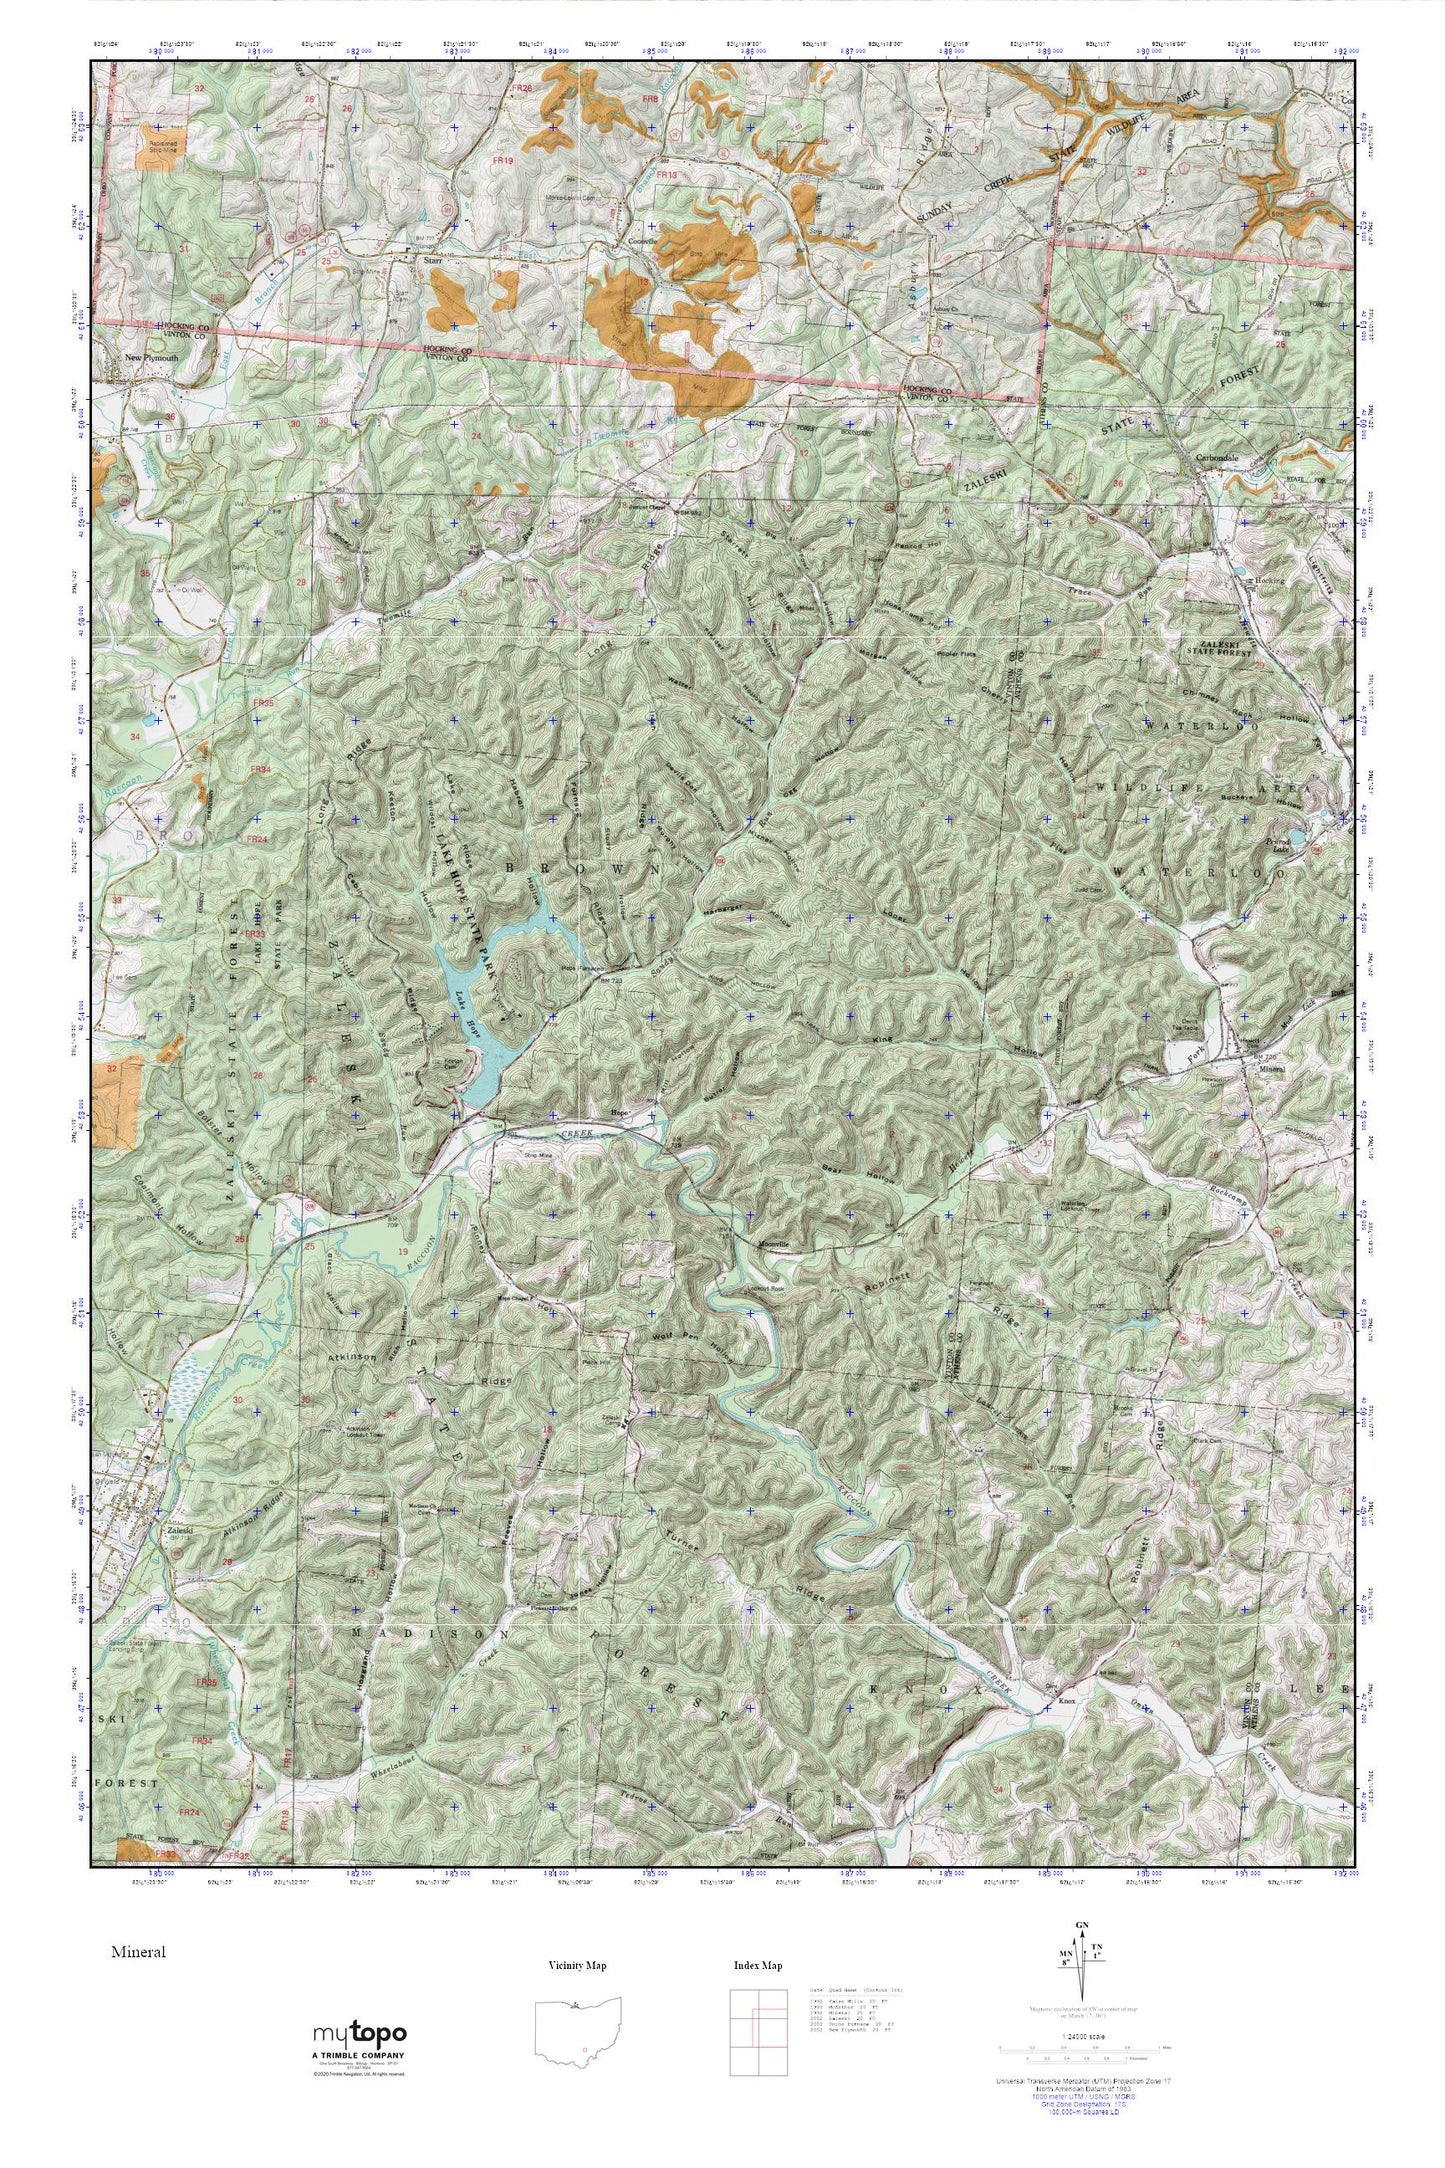 Mineral MyTopo Explorer Series Map Image